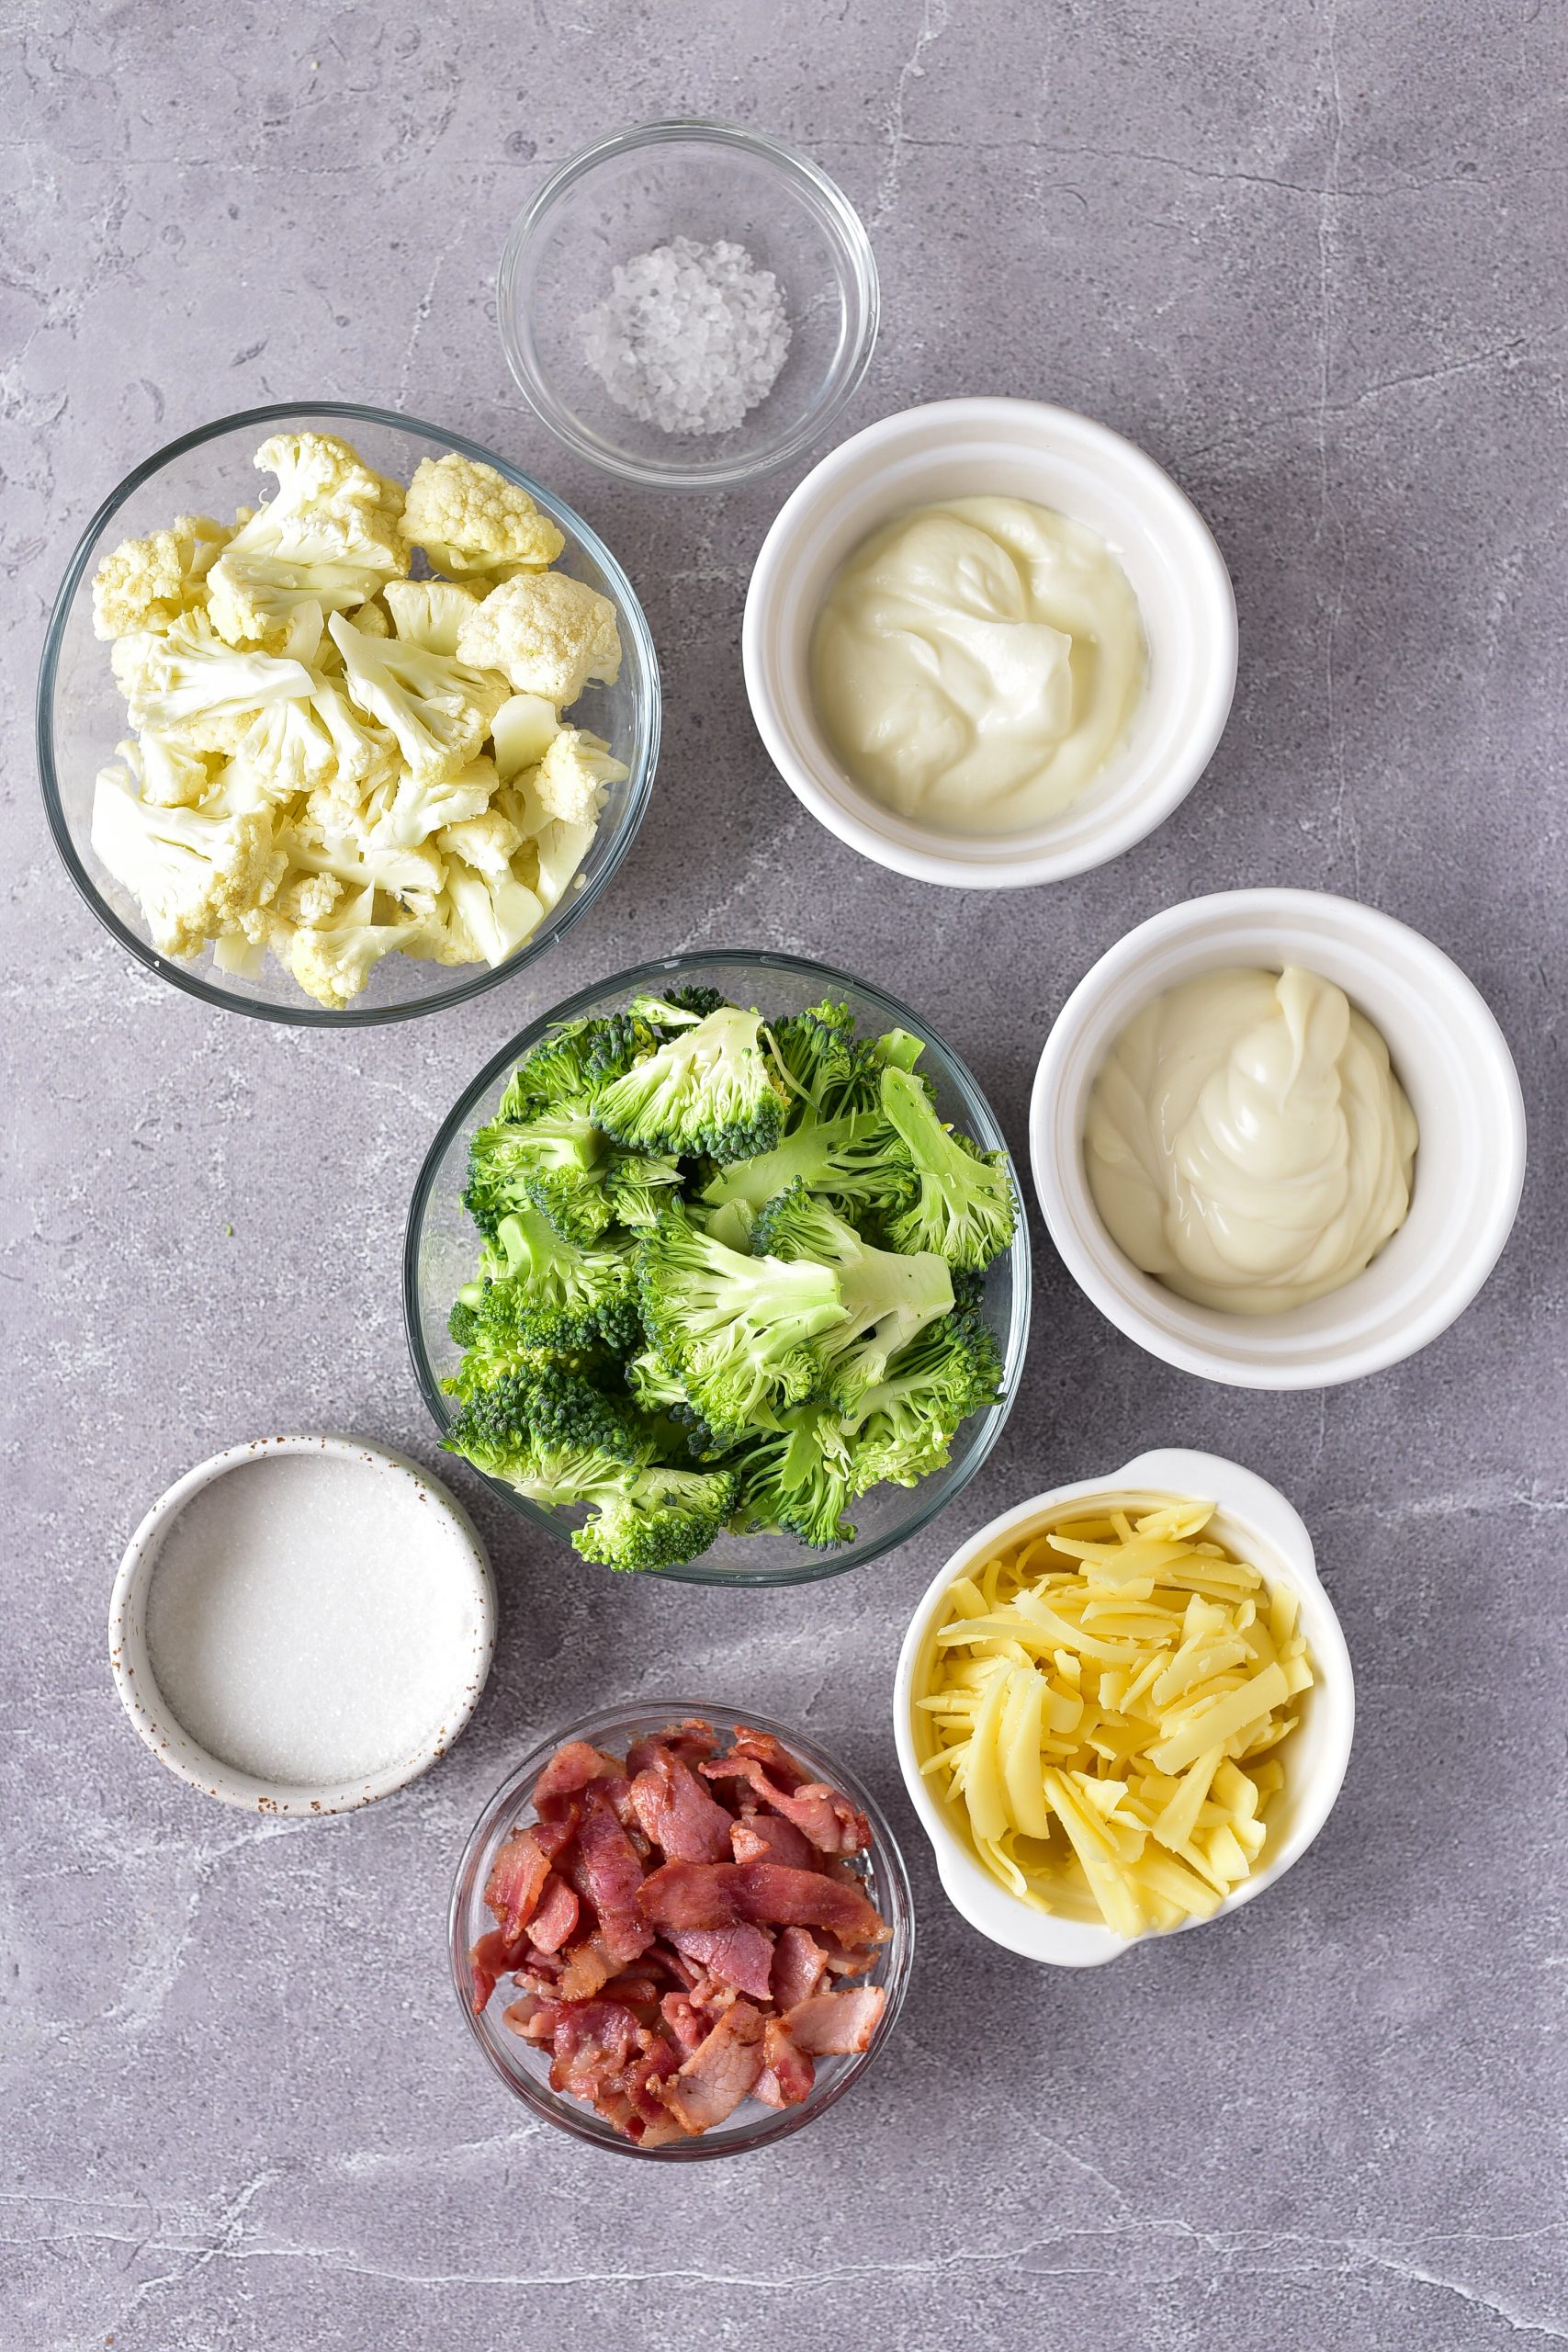 amish broccoli salad ingredients